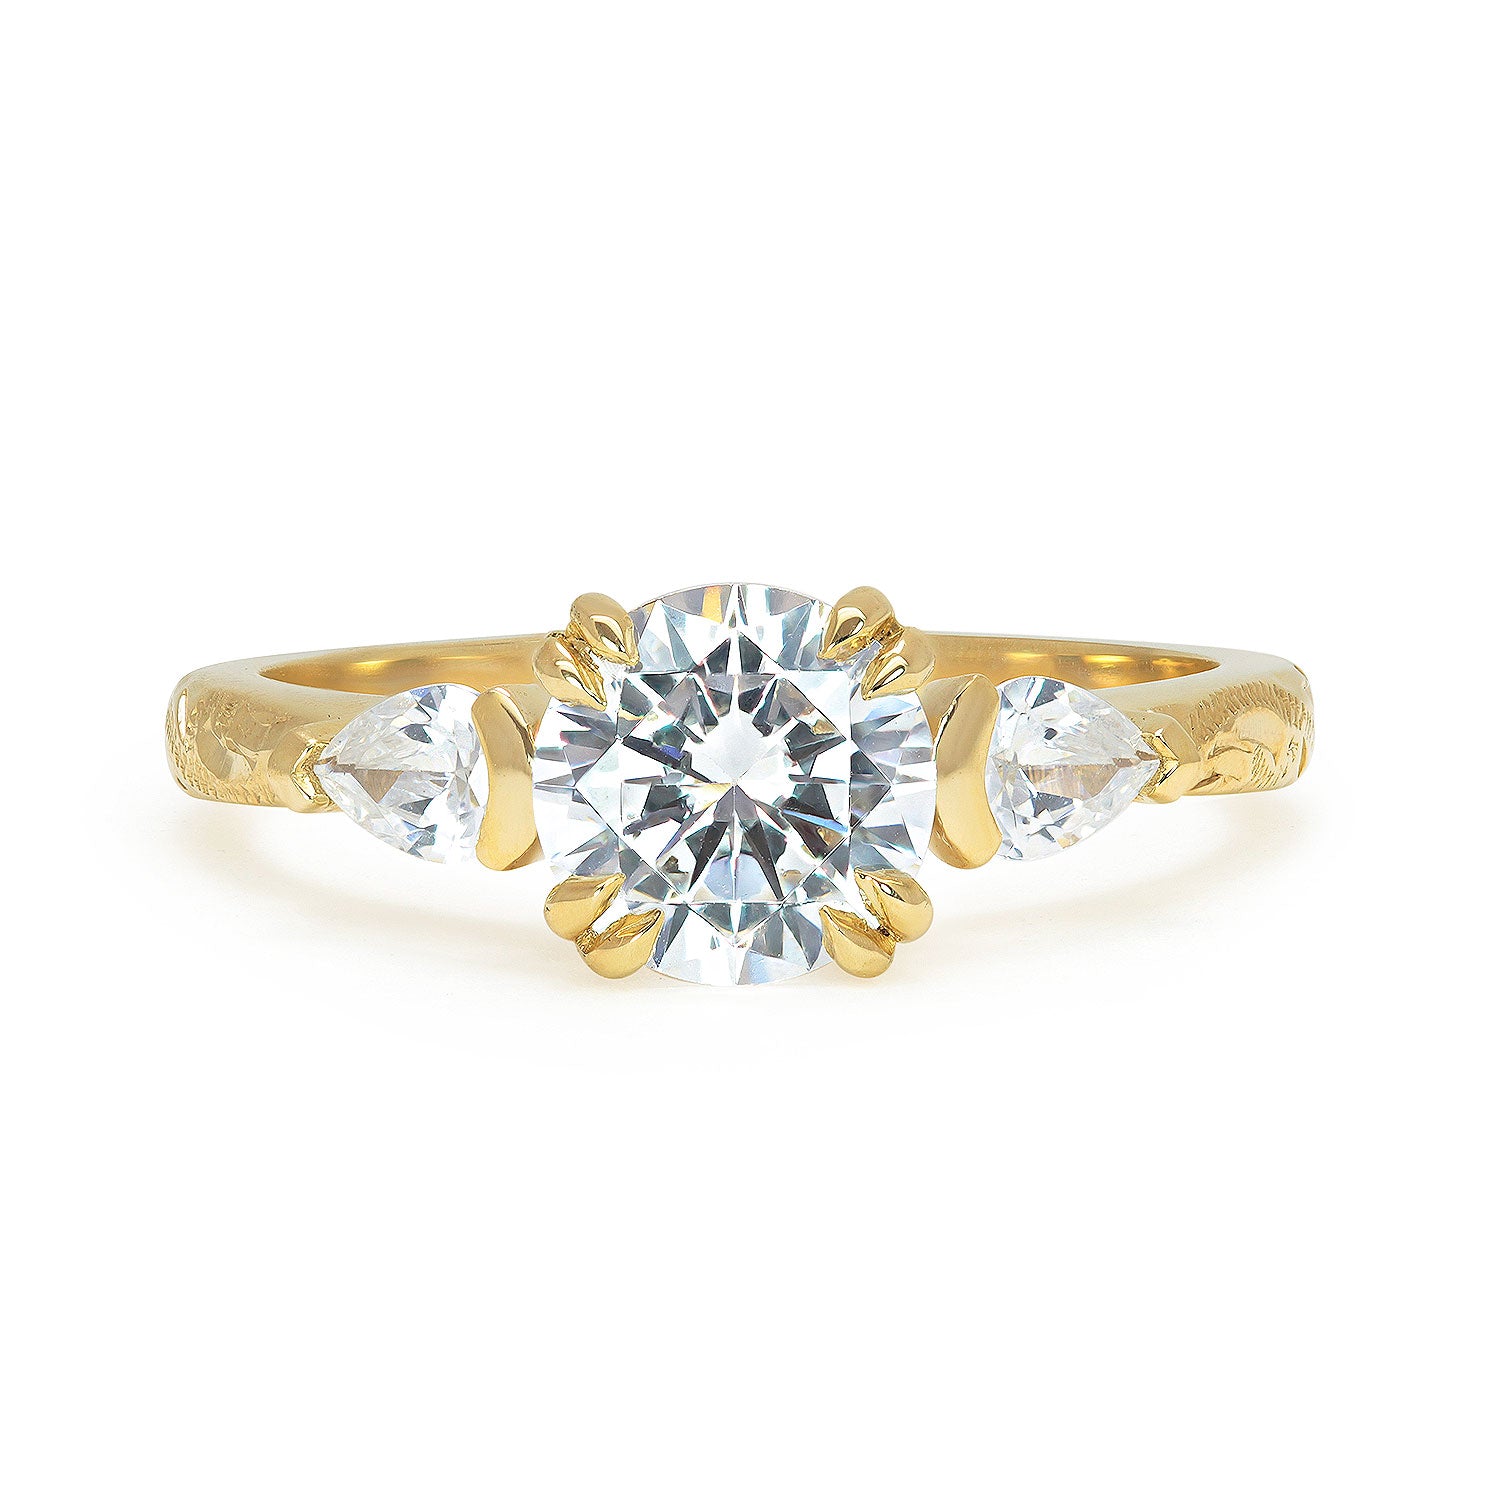 Lebrusan Studio Artisan Trilogy Engagement Ring, 1ct Ocean Diamond, 0.3ct pear-cut side Ocean Diamonds, 18ct Fairmined Ecological Gold, hand engraving